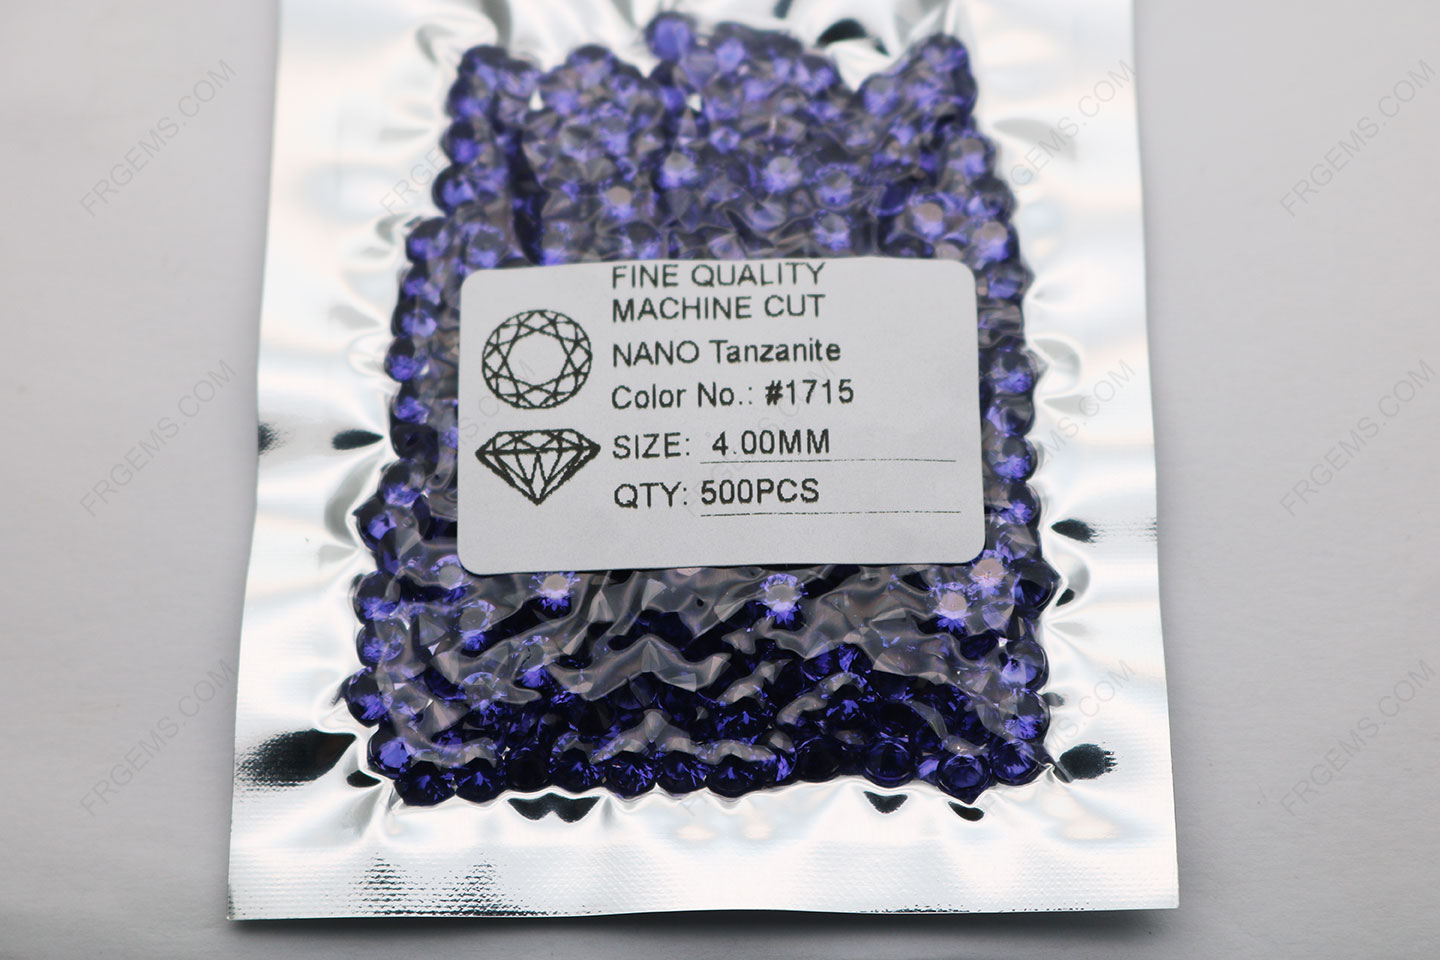 Loose Nano Crystal Tanzanite #1715 Round Faceted cut 4mm gemstones IMG_5339